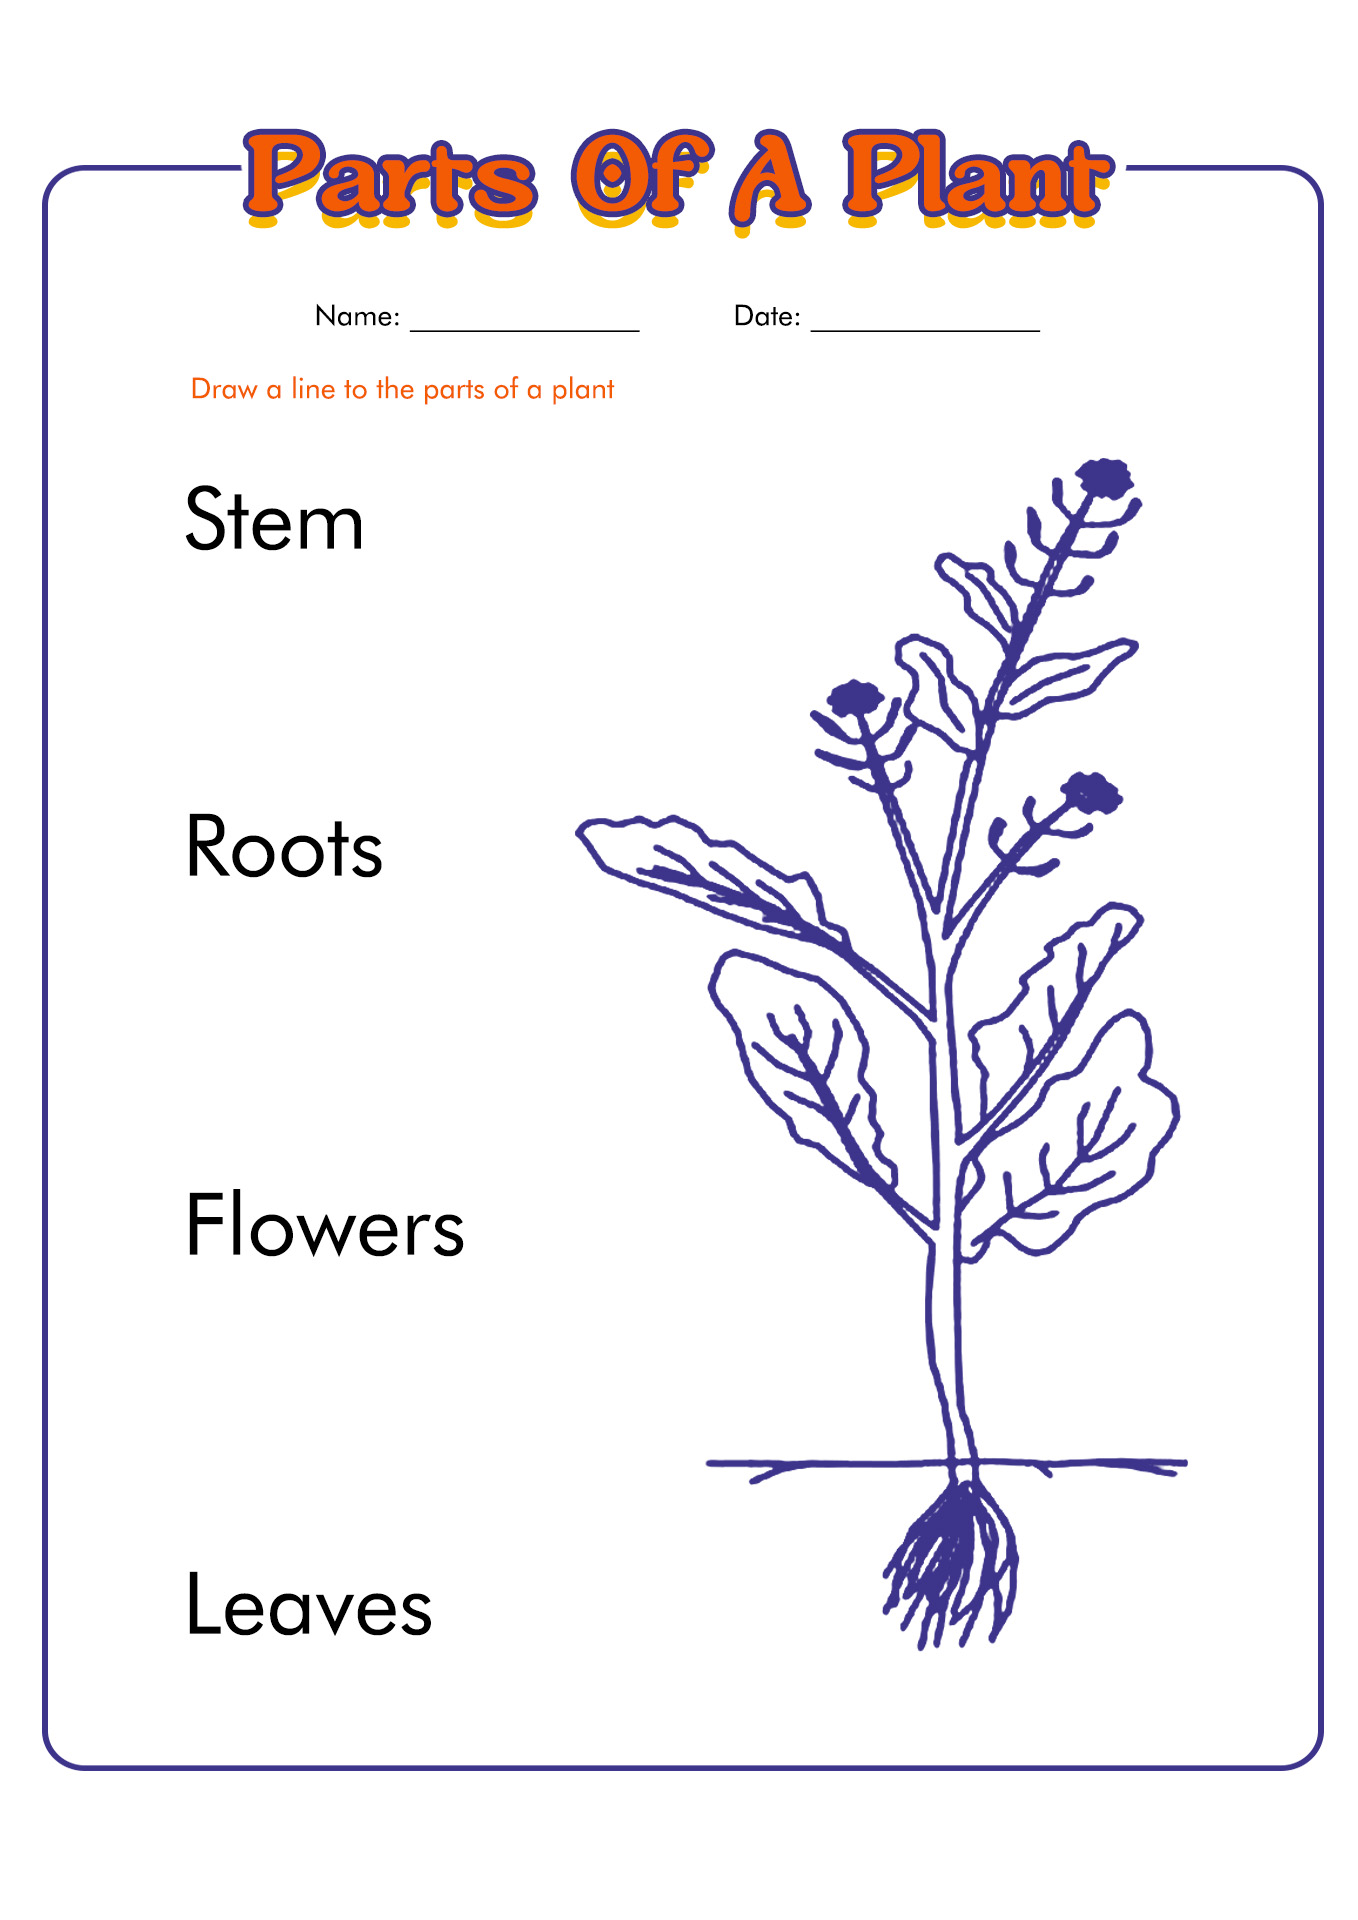 Plant Parts Worksheet Image